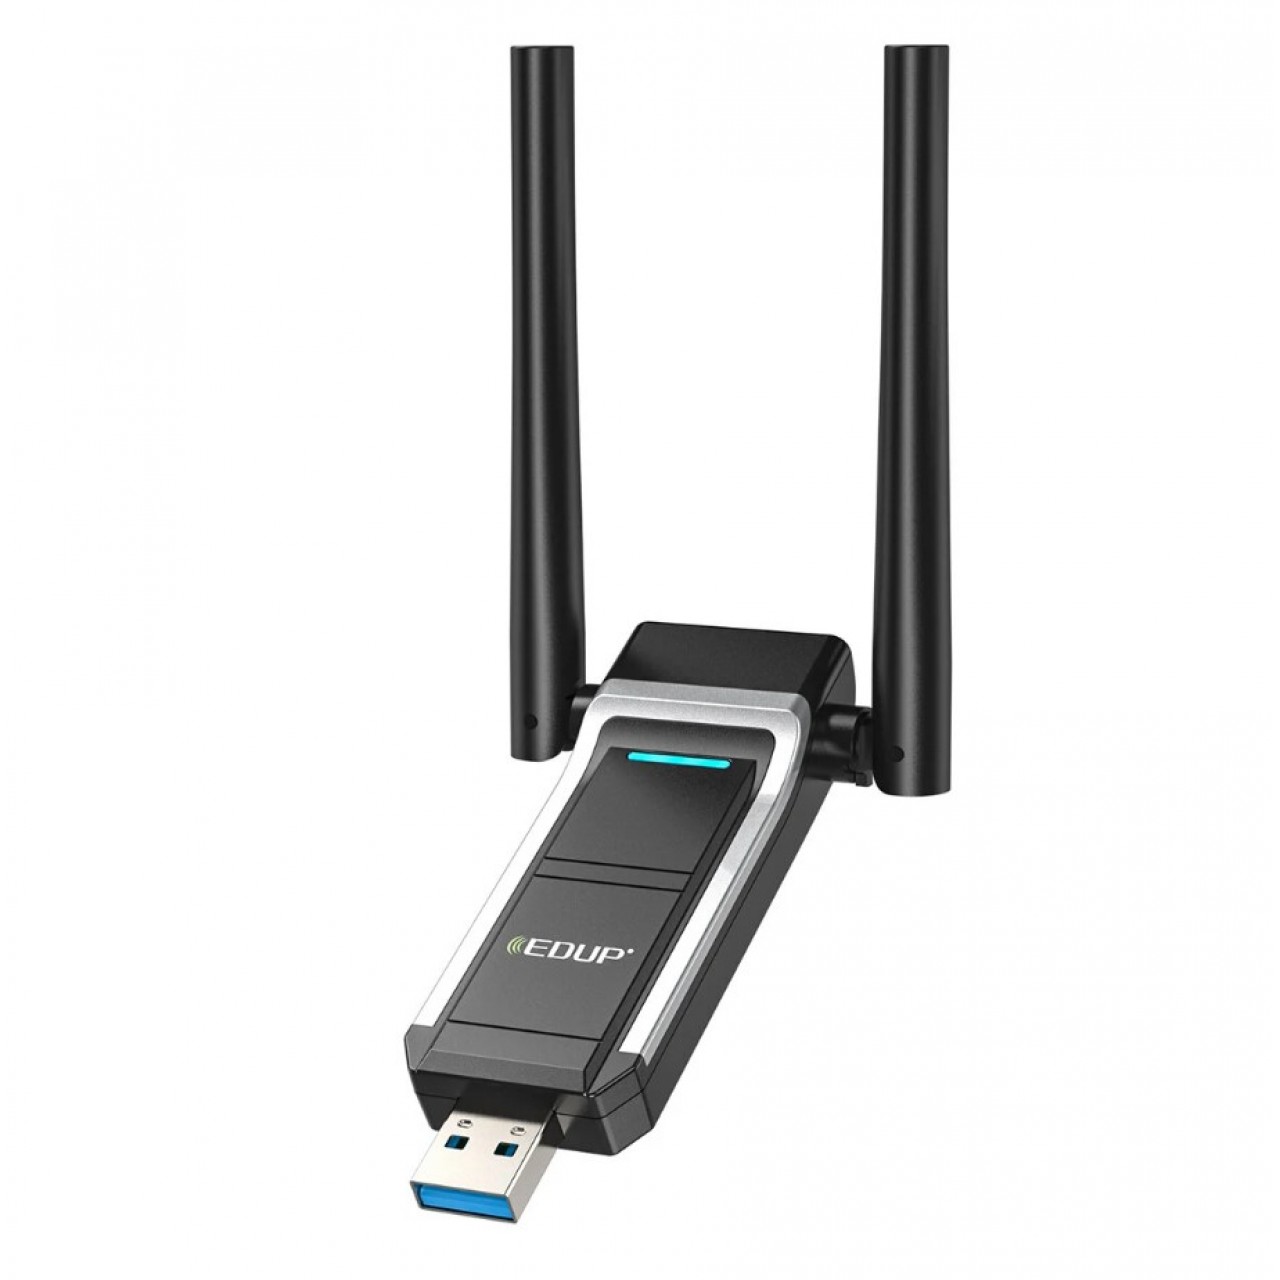 EDUP EEP-AC1698 AC1300 USB WiFi Adapter